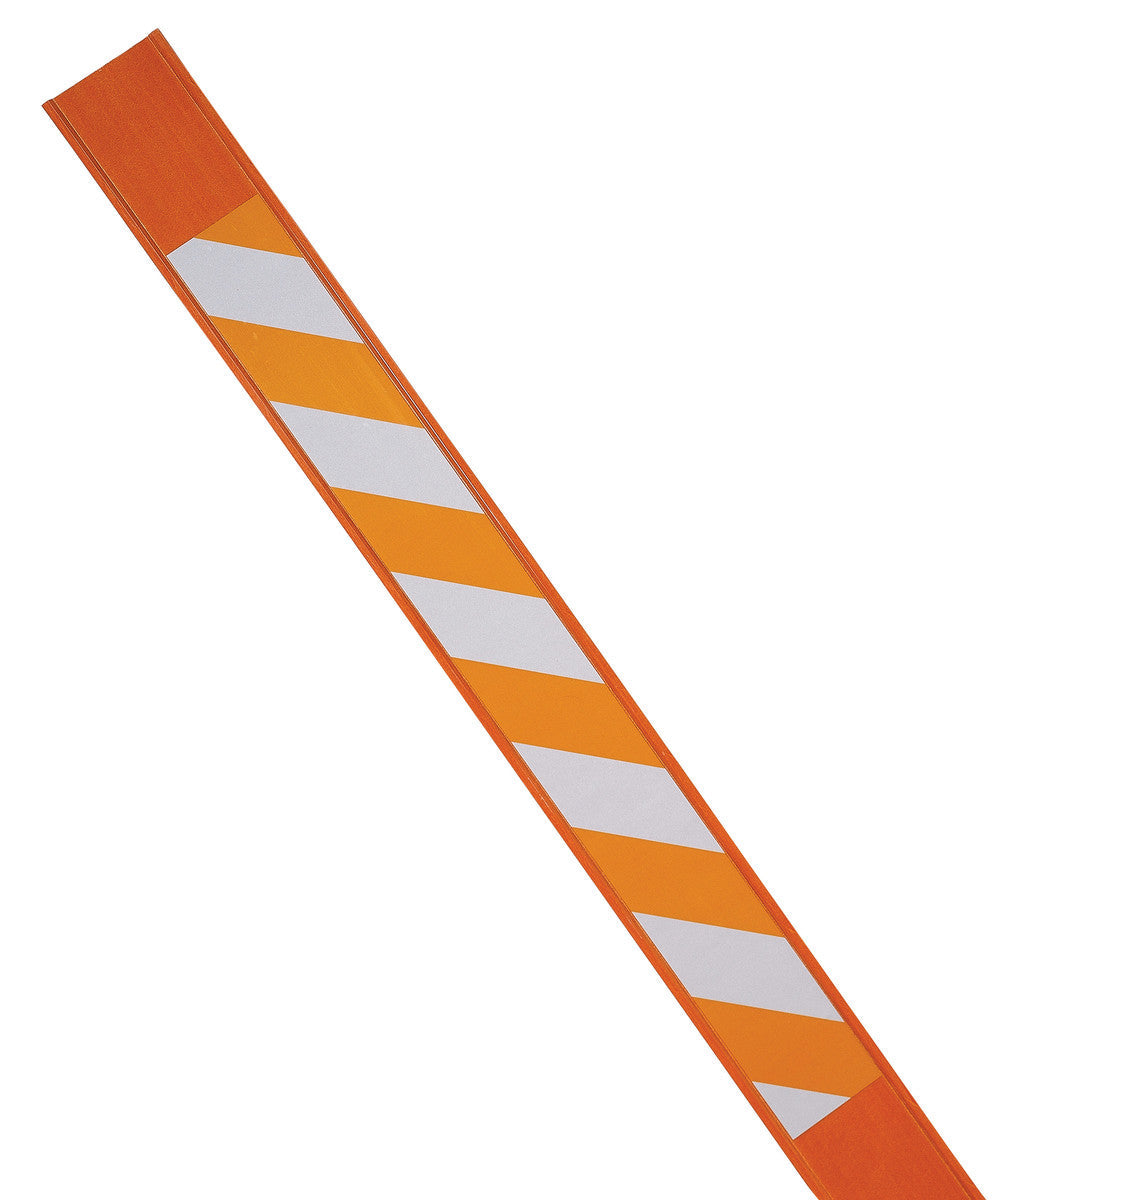 Brady ® 3.75" X 66" White on Orange Reinforced Polymer Warning Stake With Reflective Stripes